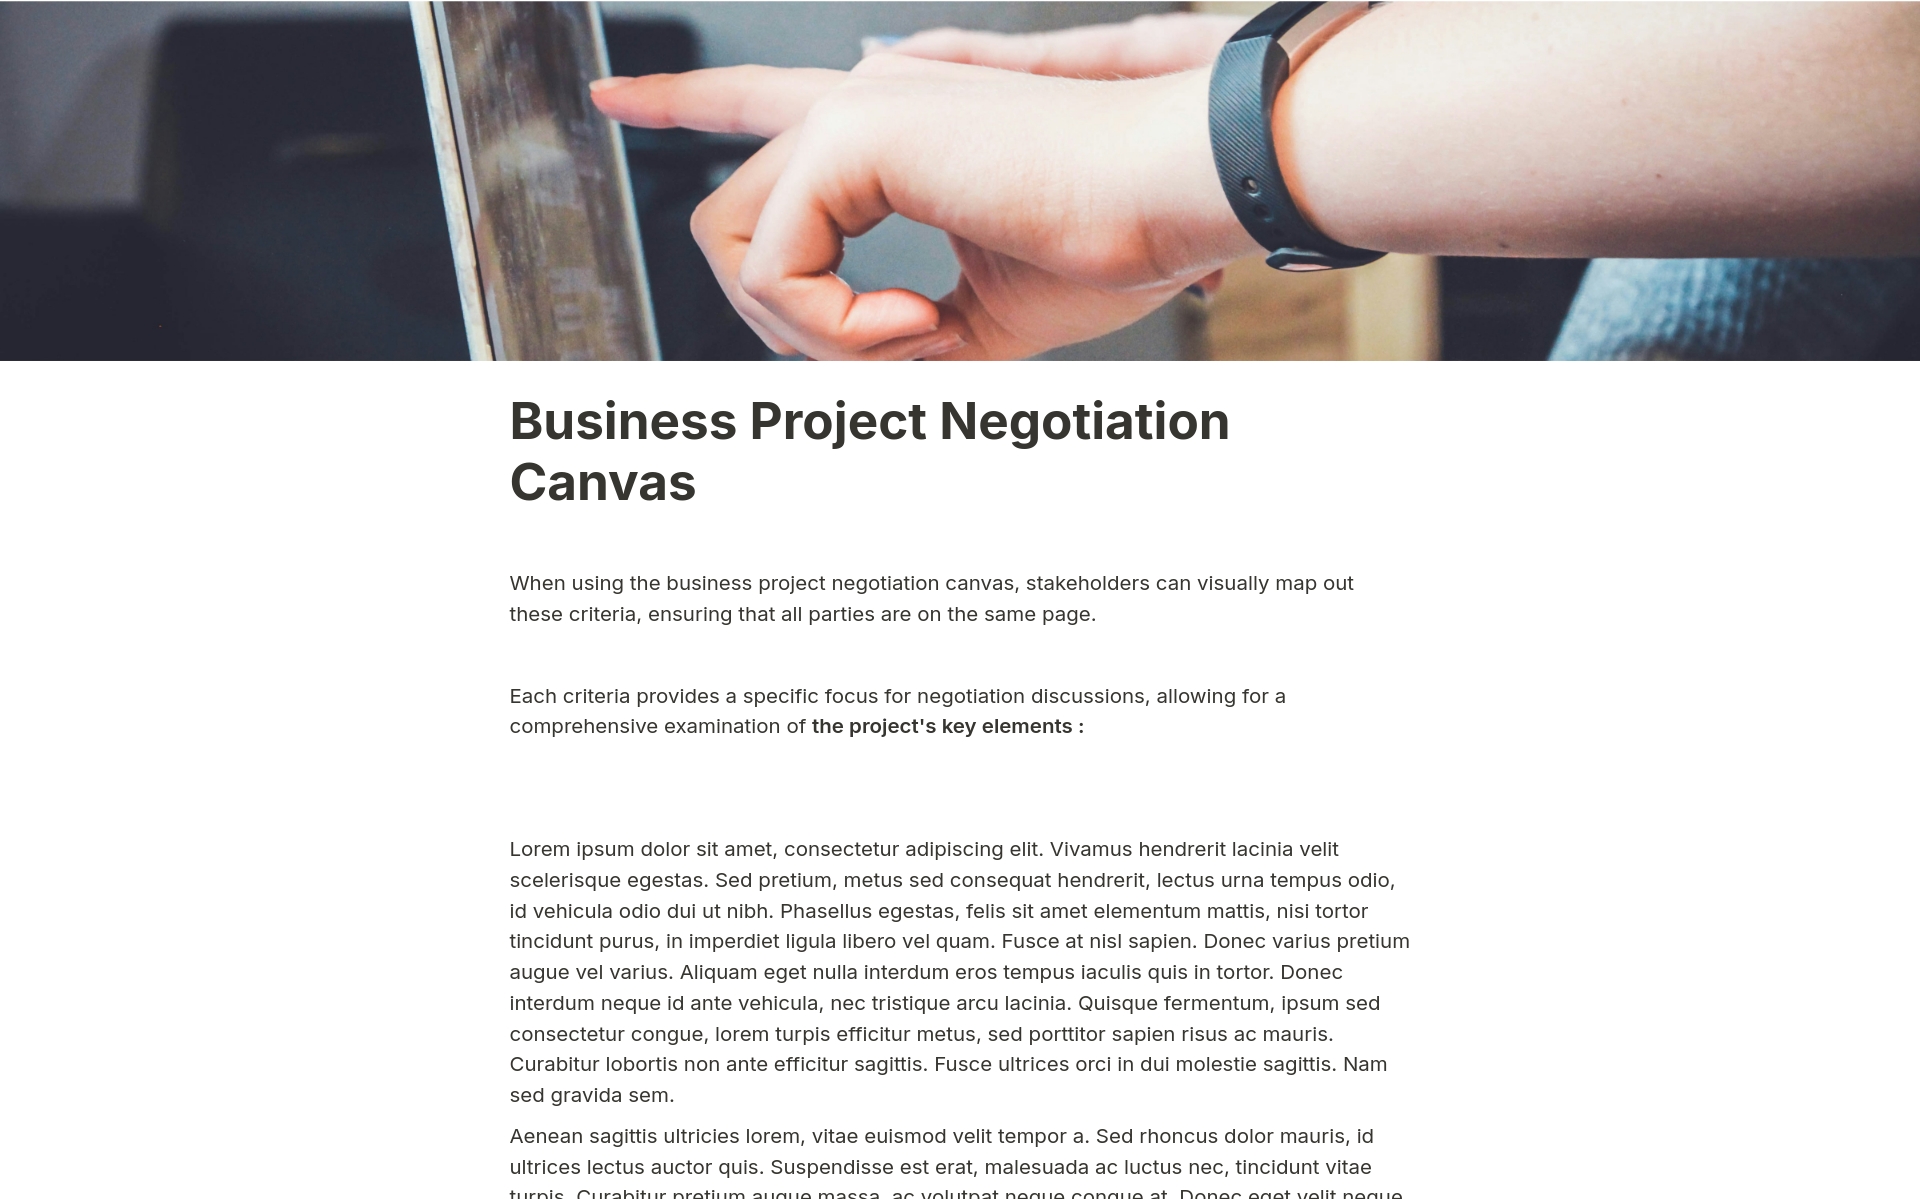 Vista previa de plantilla para Business Project Negotiation Canvas